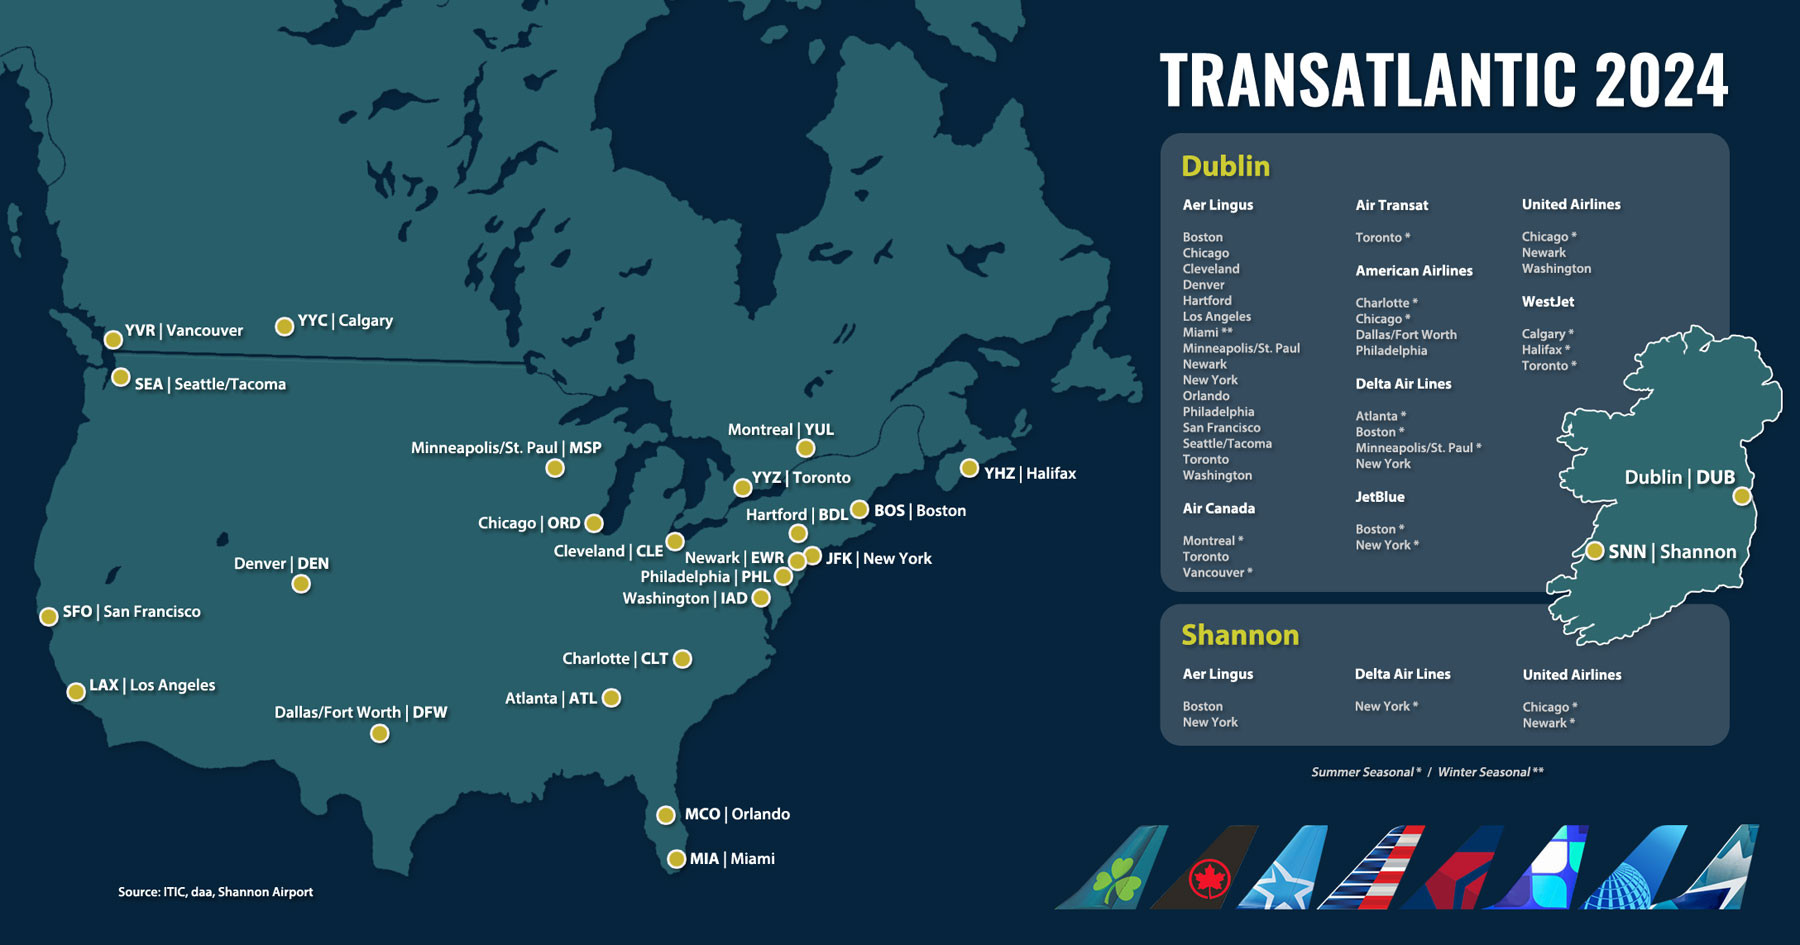 Transatlantic destinations between Ireland and North America in 2024